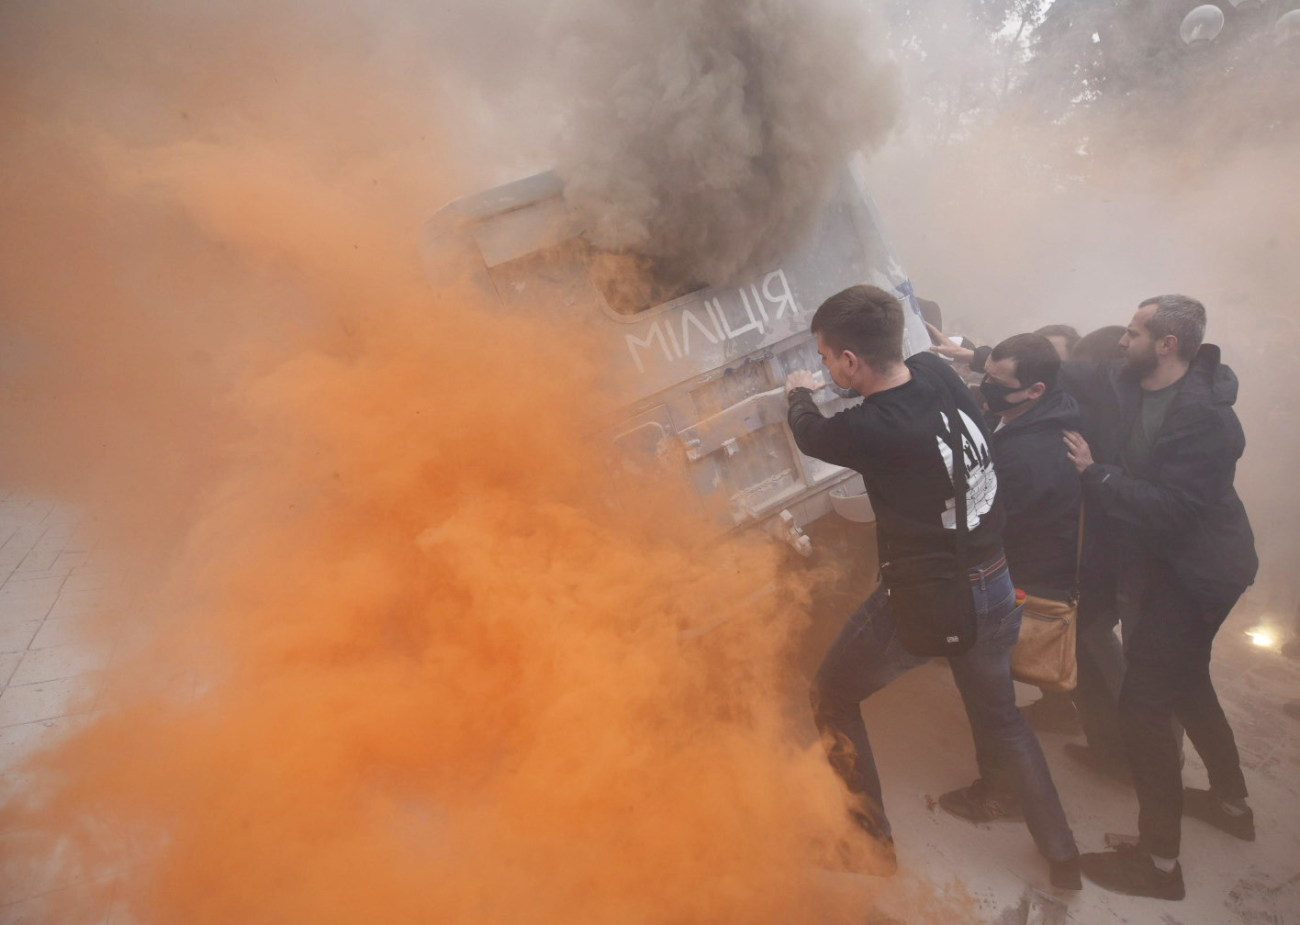 В Киеве митингуют против Авакова